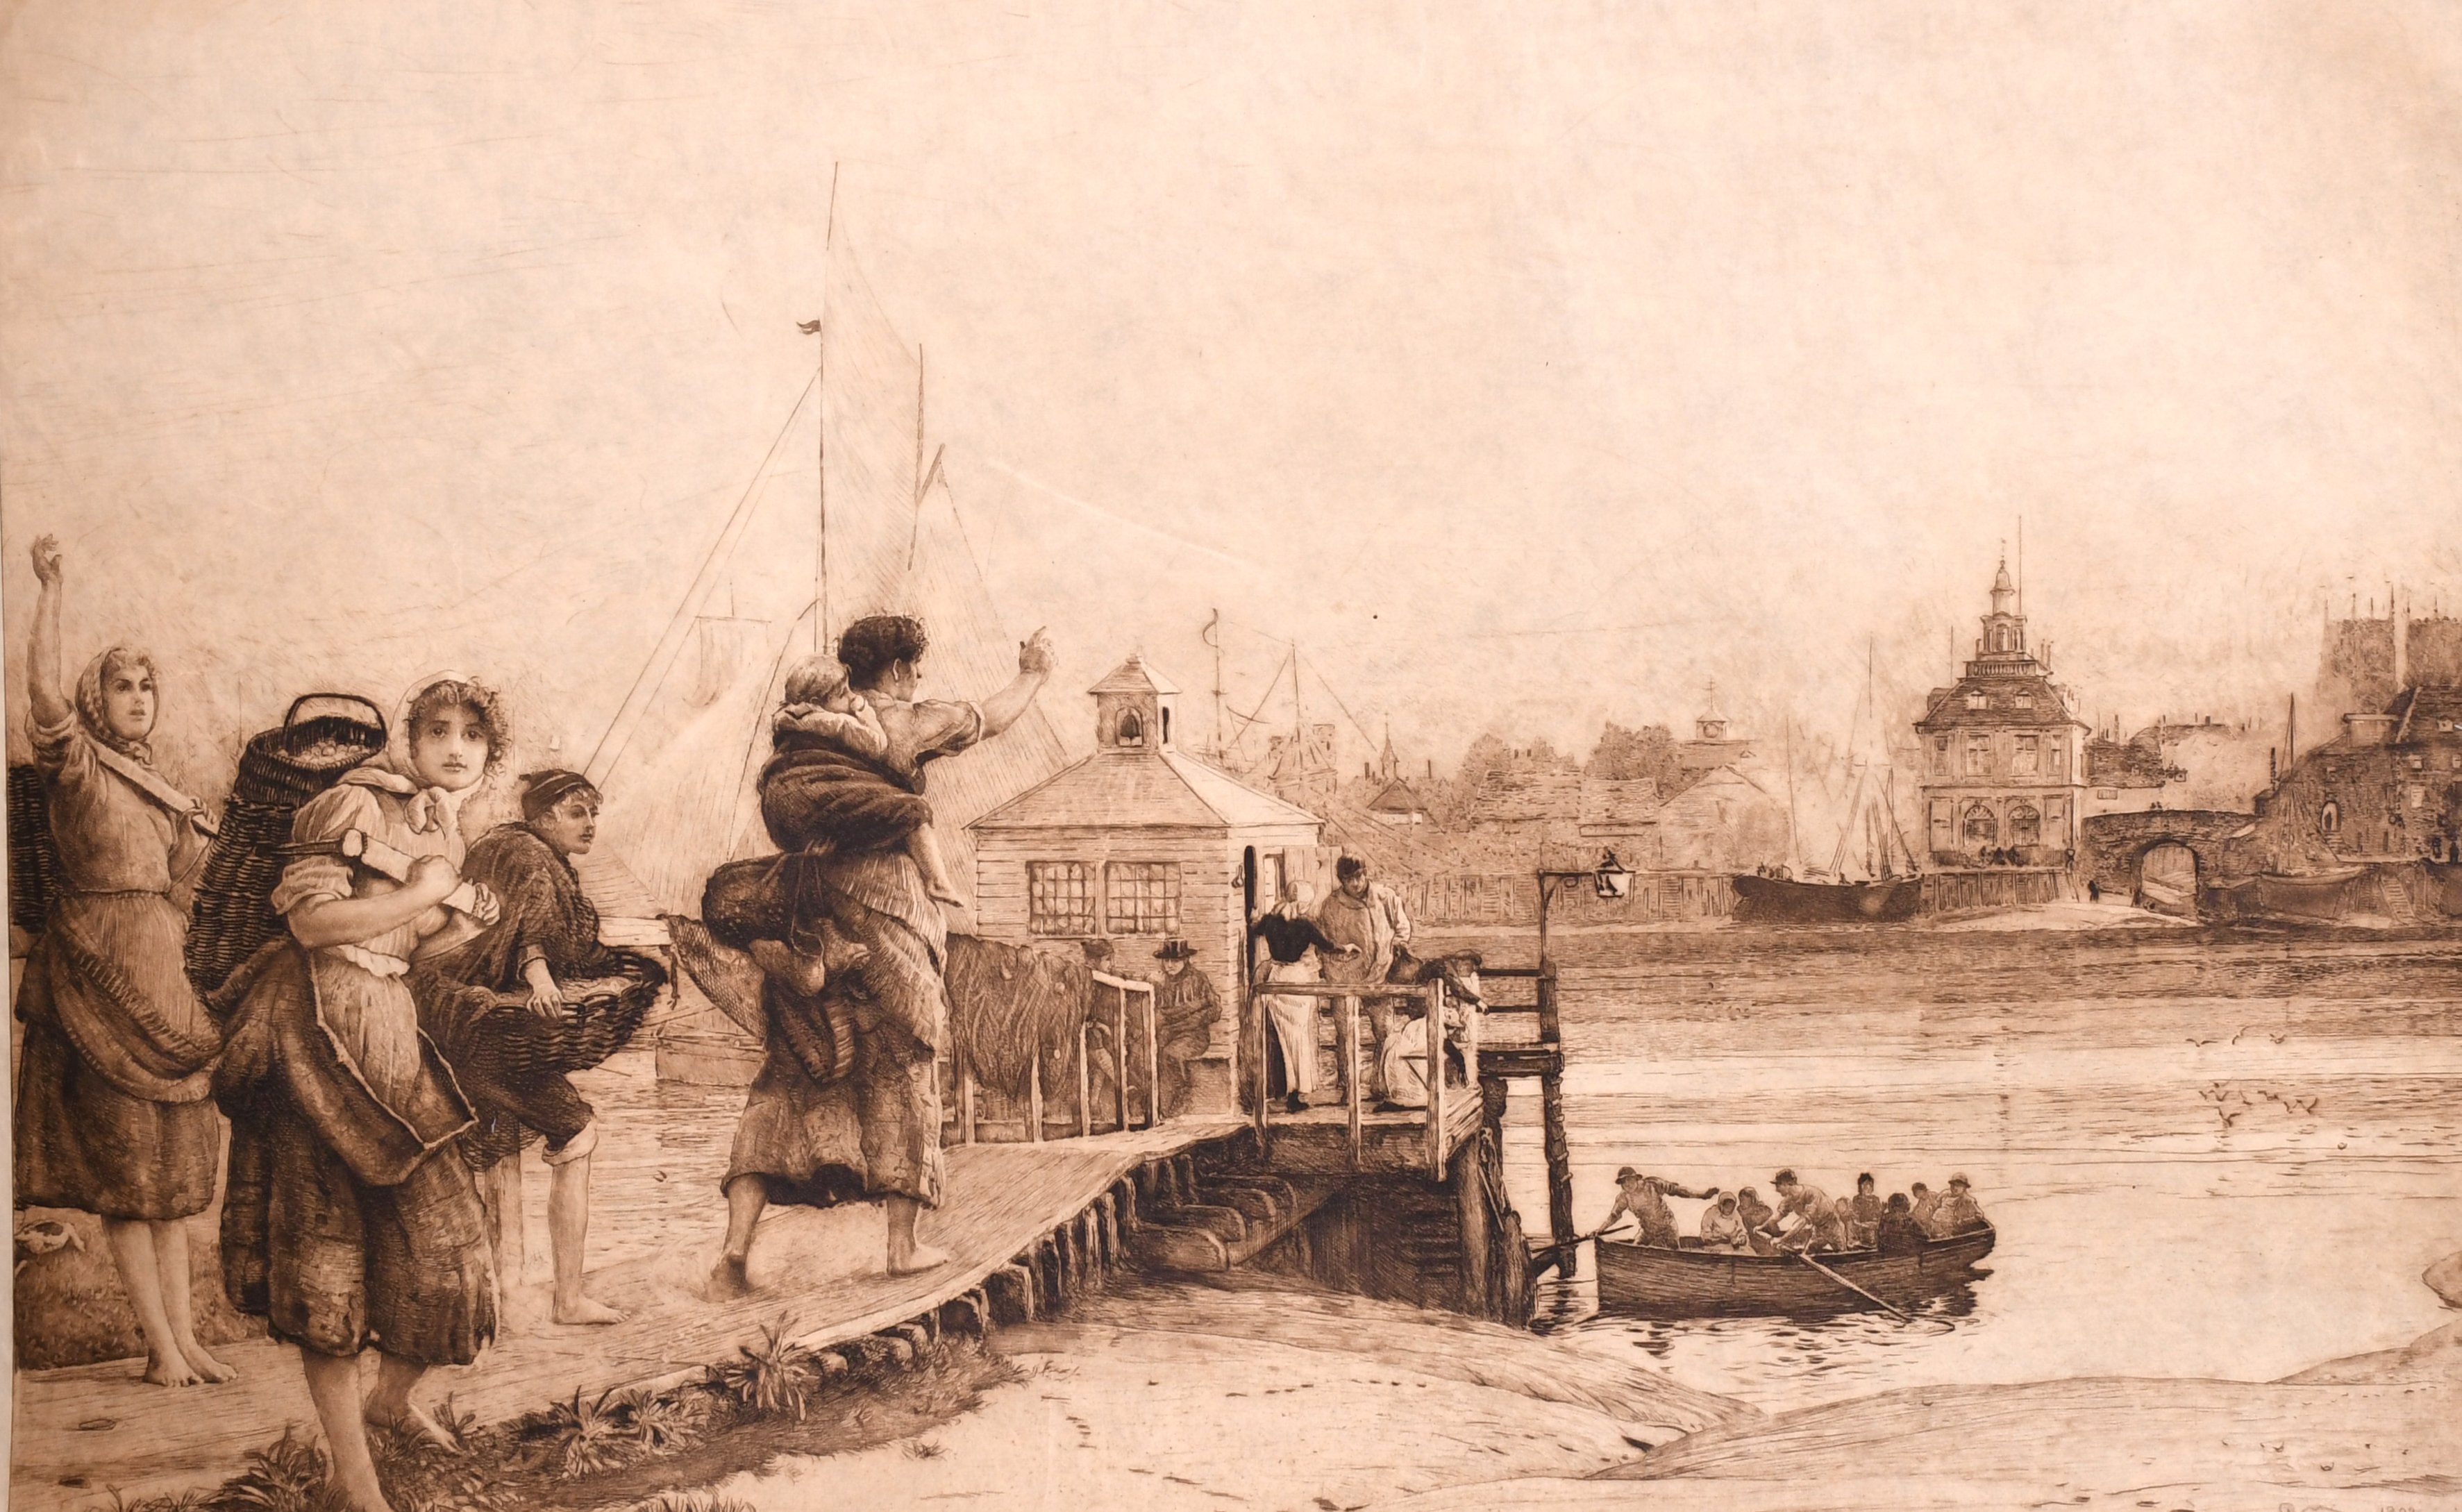 Robert Walker Macbeth (1848-1910) British. “Waiting for the Ferry”, Engraving, Unframed, 13.75” x